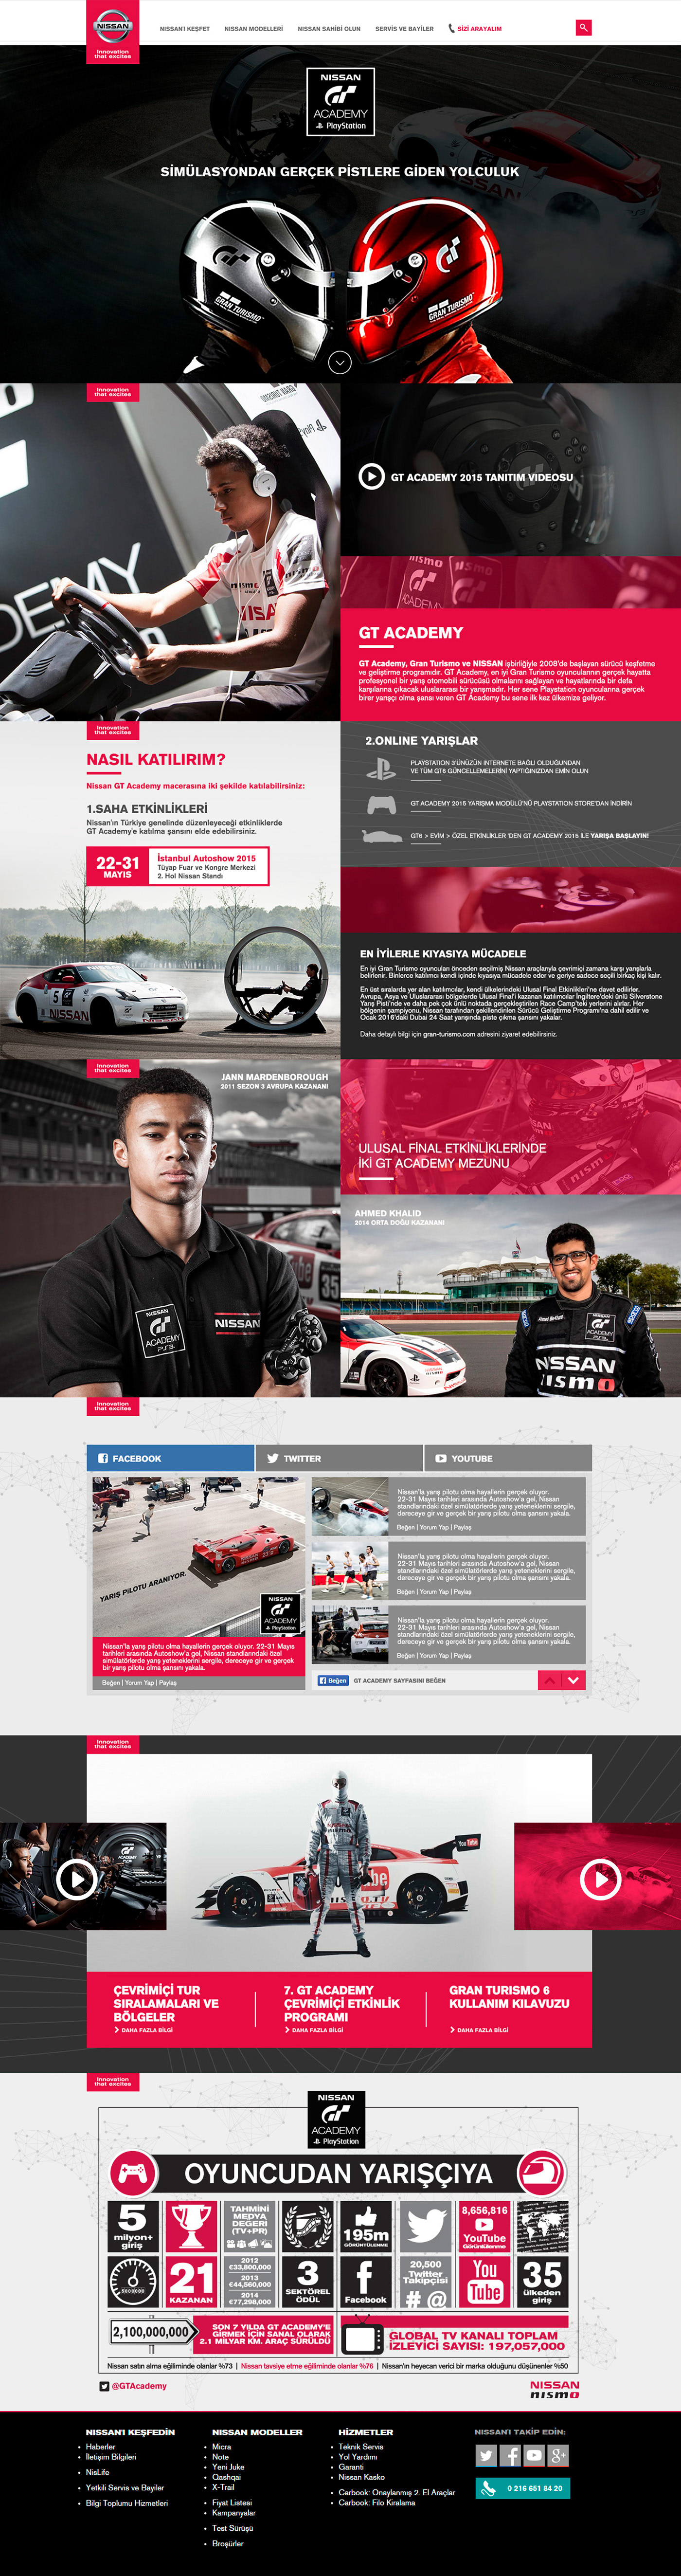 Adobe Portfolio Nissan GT Academy Gran Turismo NissanConnect Juke Rhythm Nissan Juke